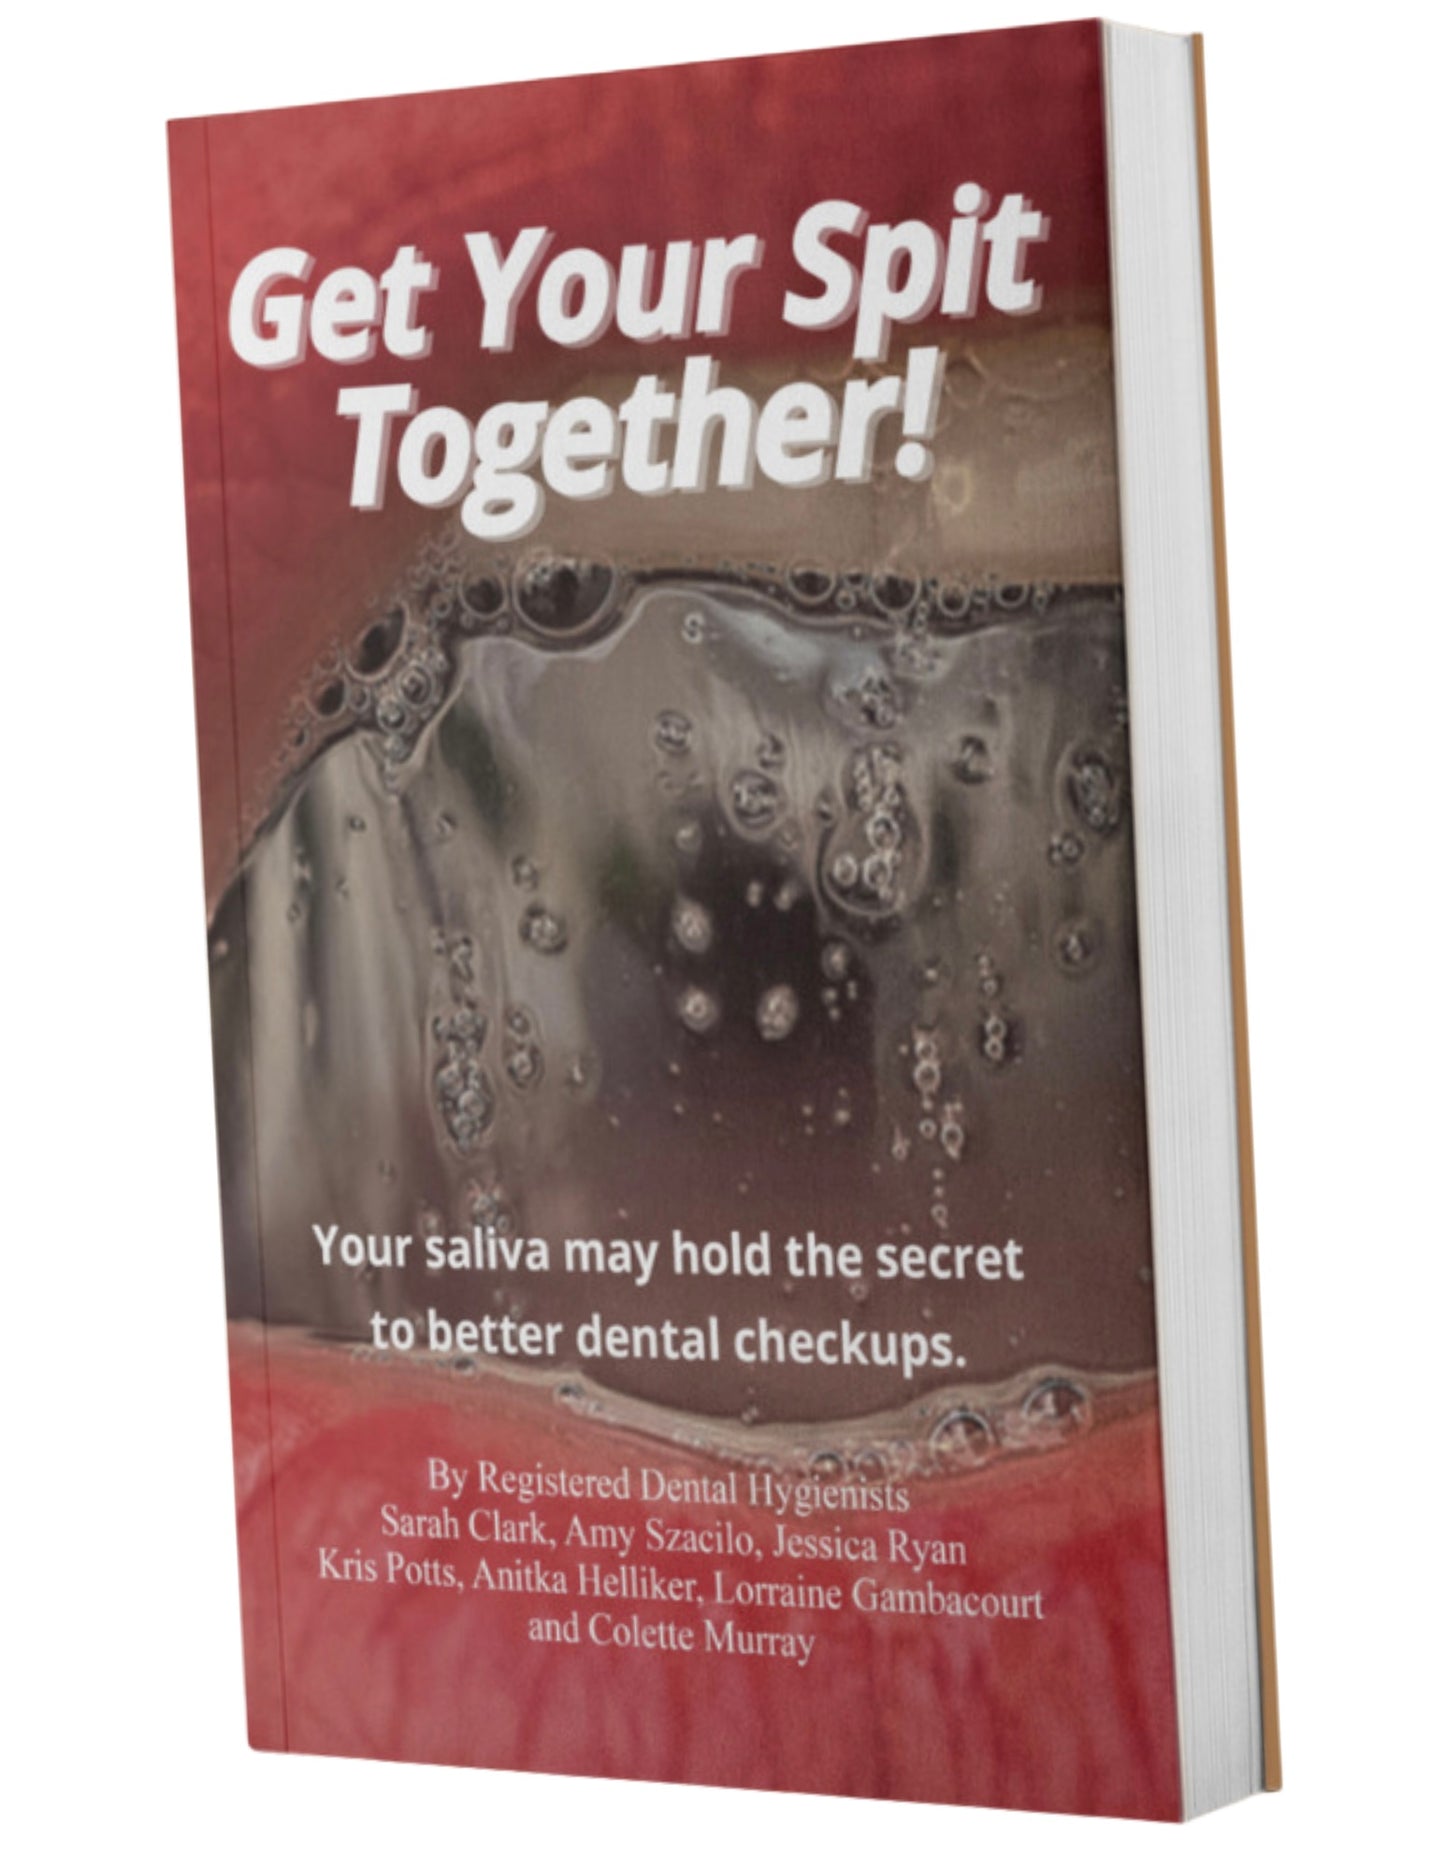 Book “Get your spit together”